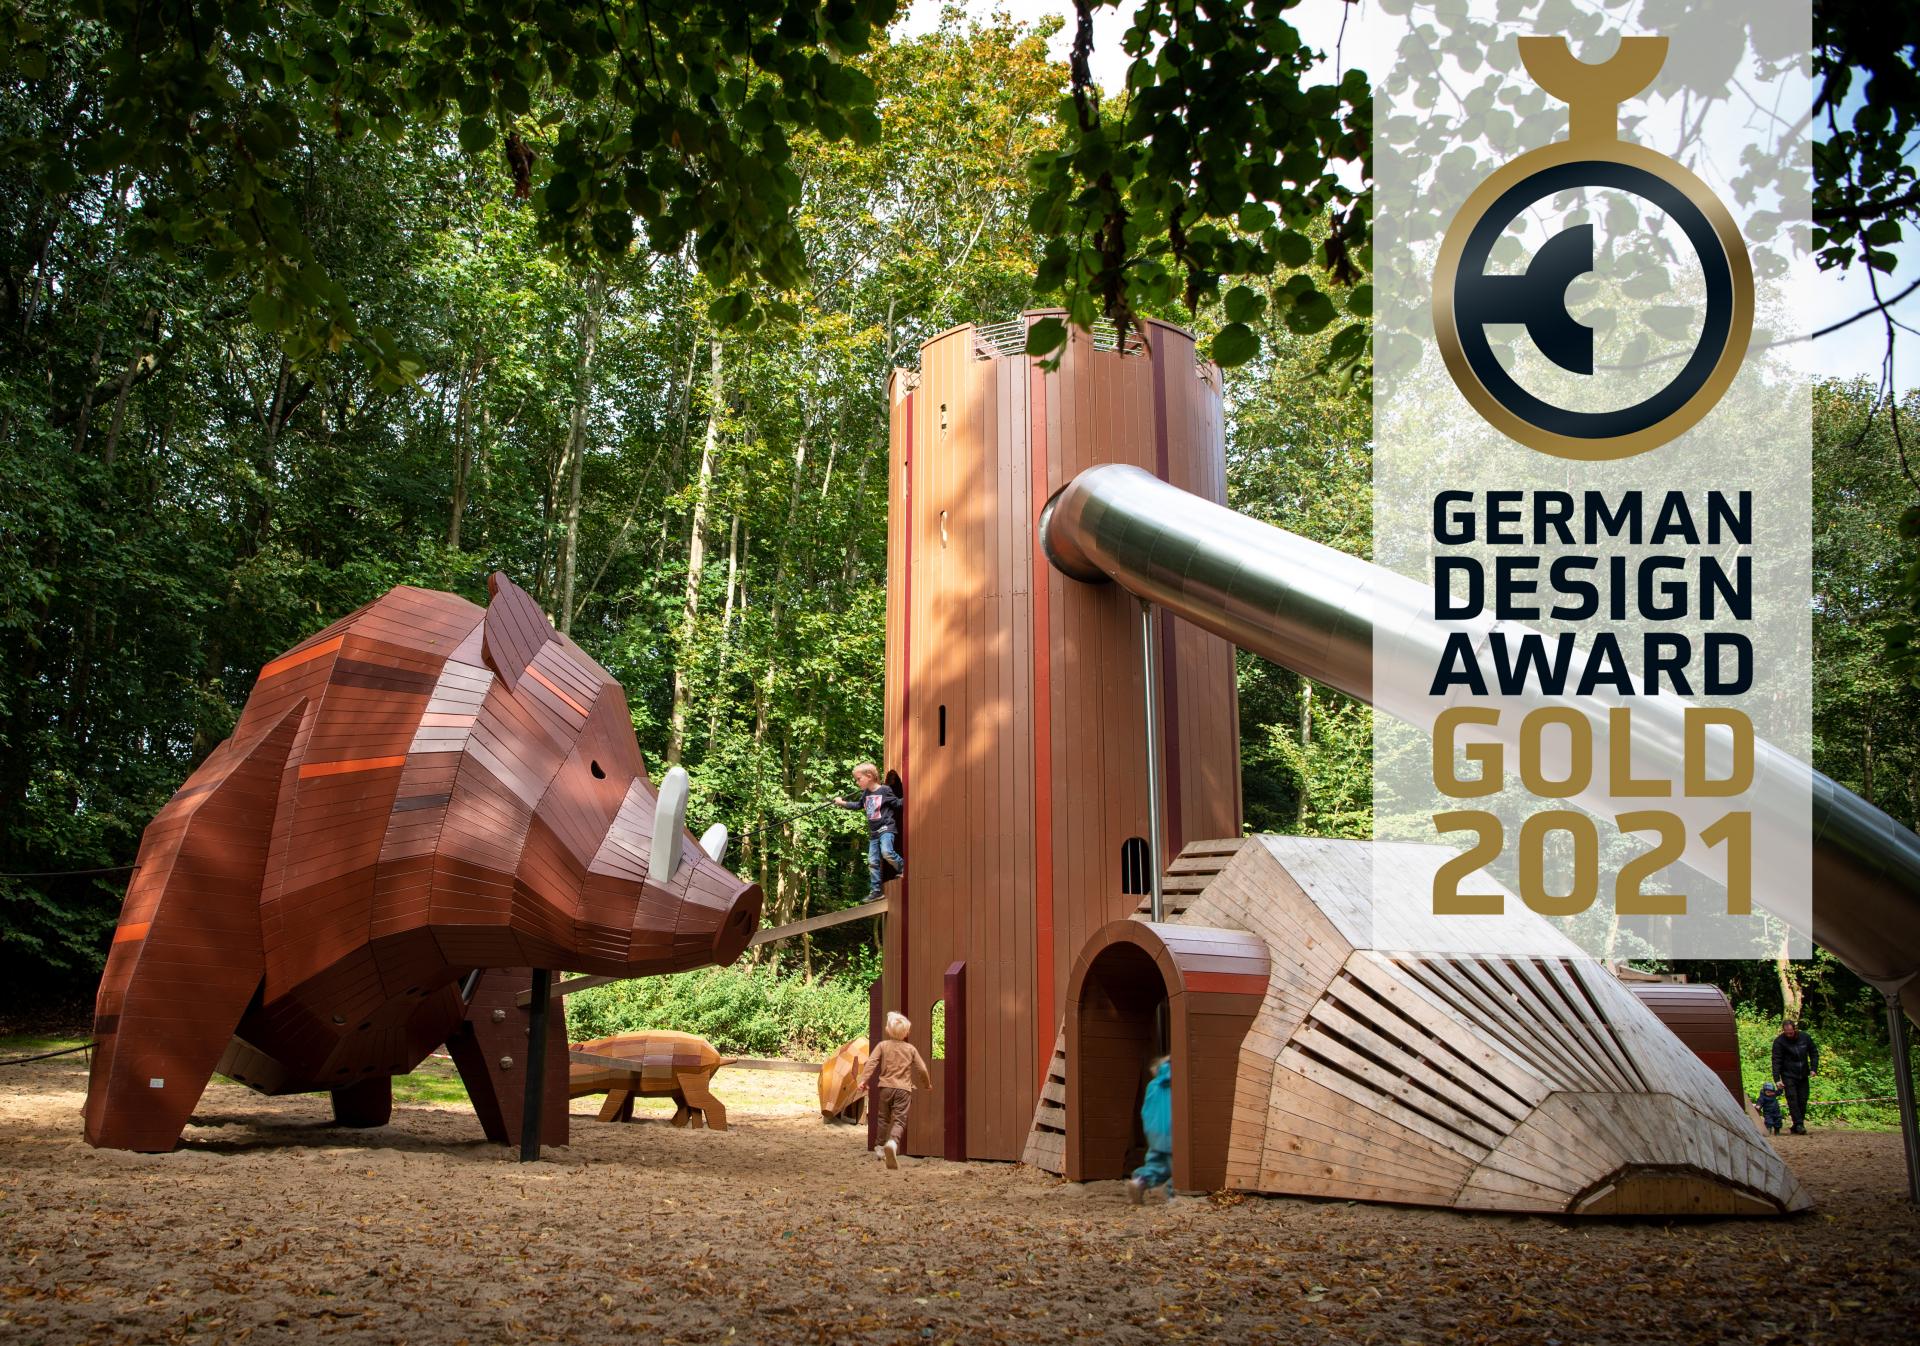 MONSTRUM fantastic playgrounds play German design award